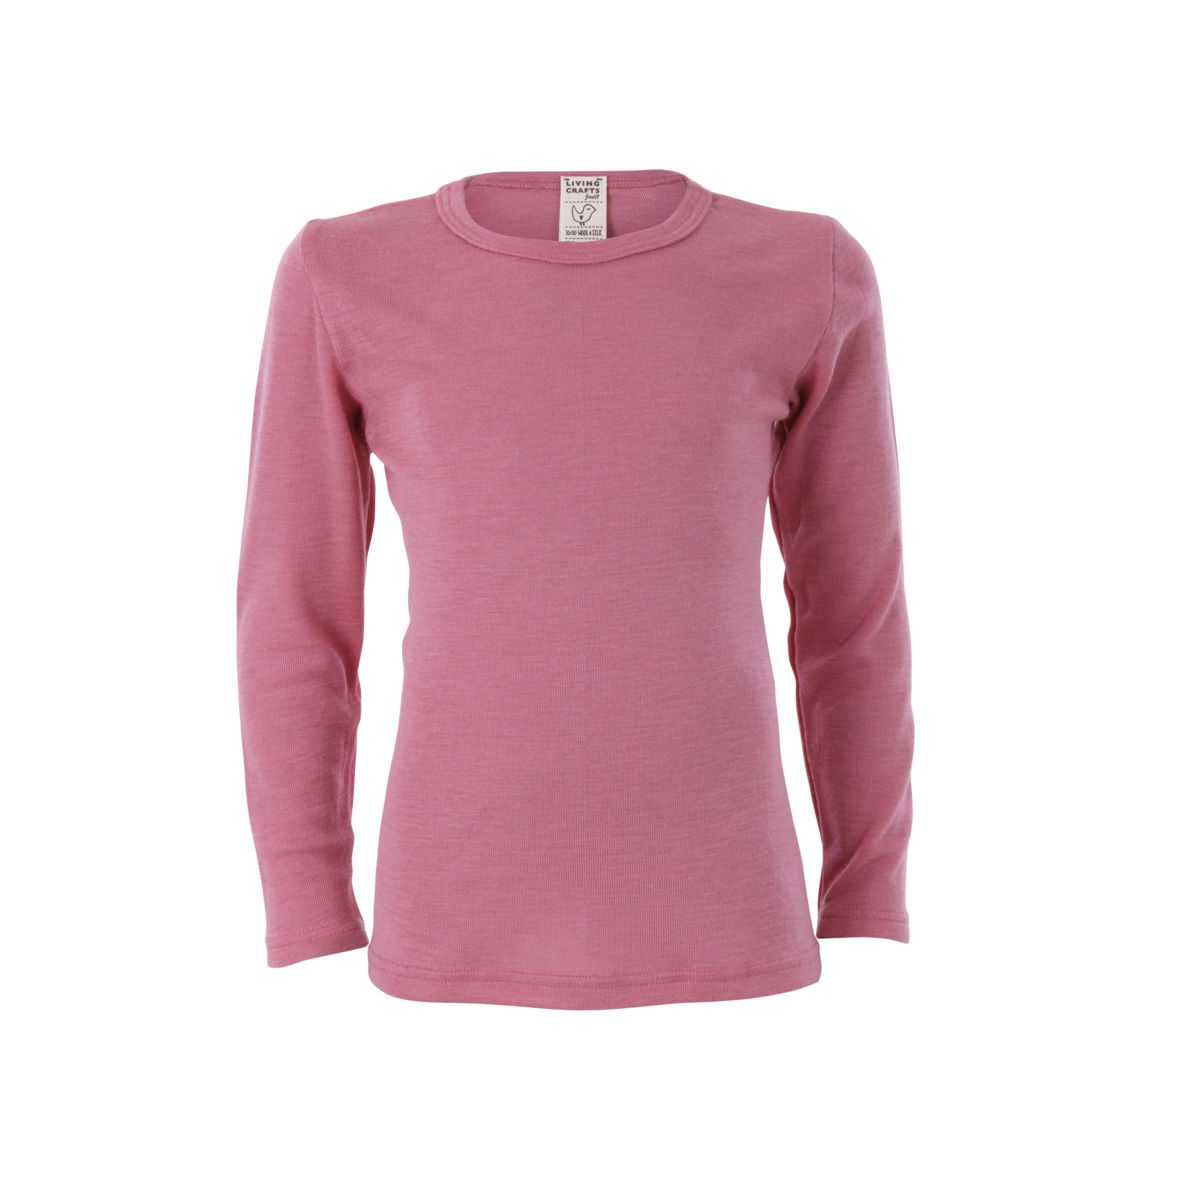 Pink Long-sleeved shirt, 